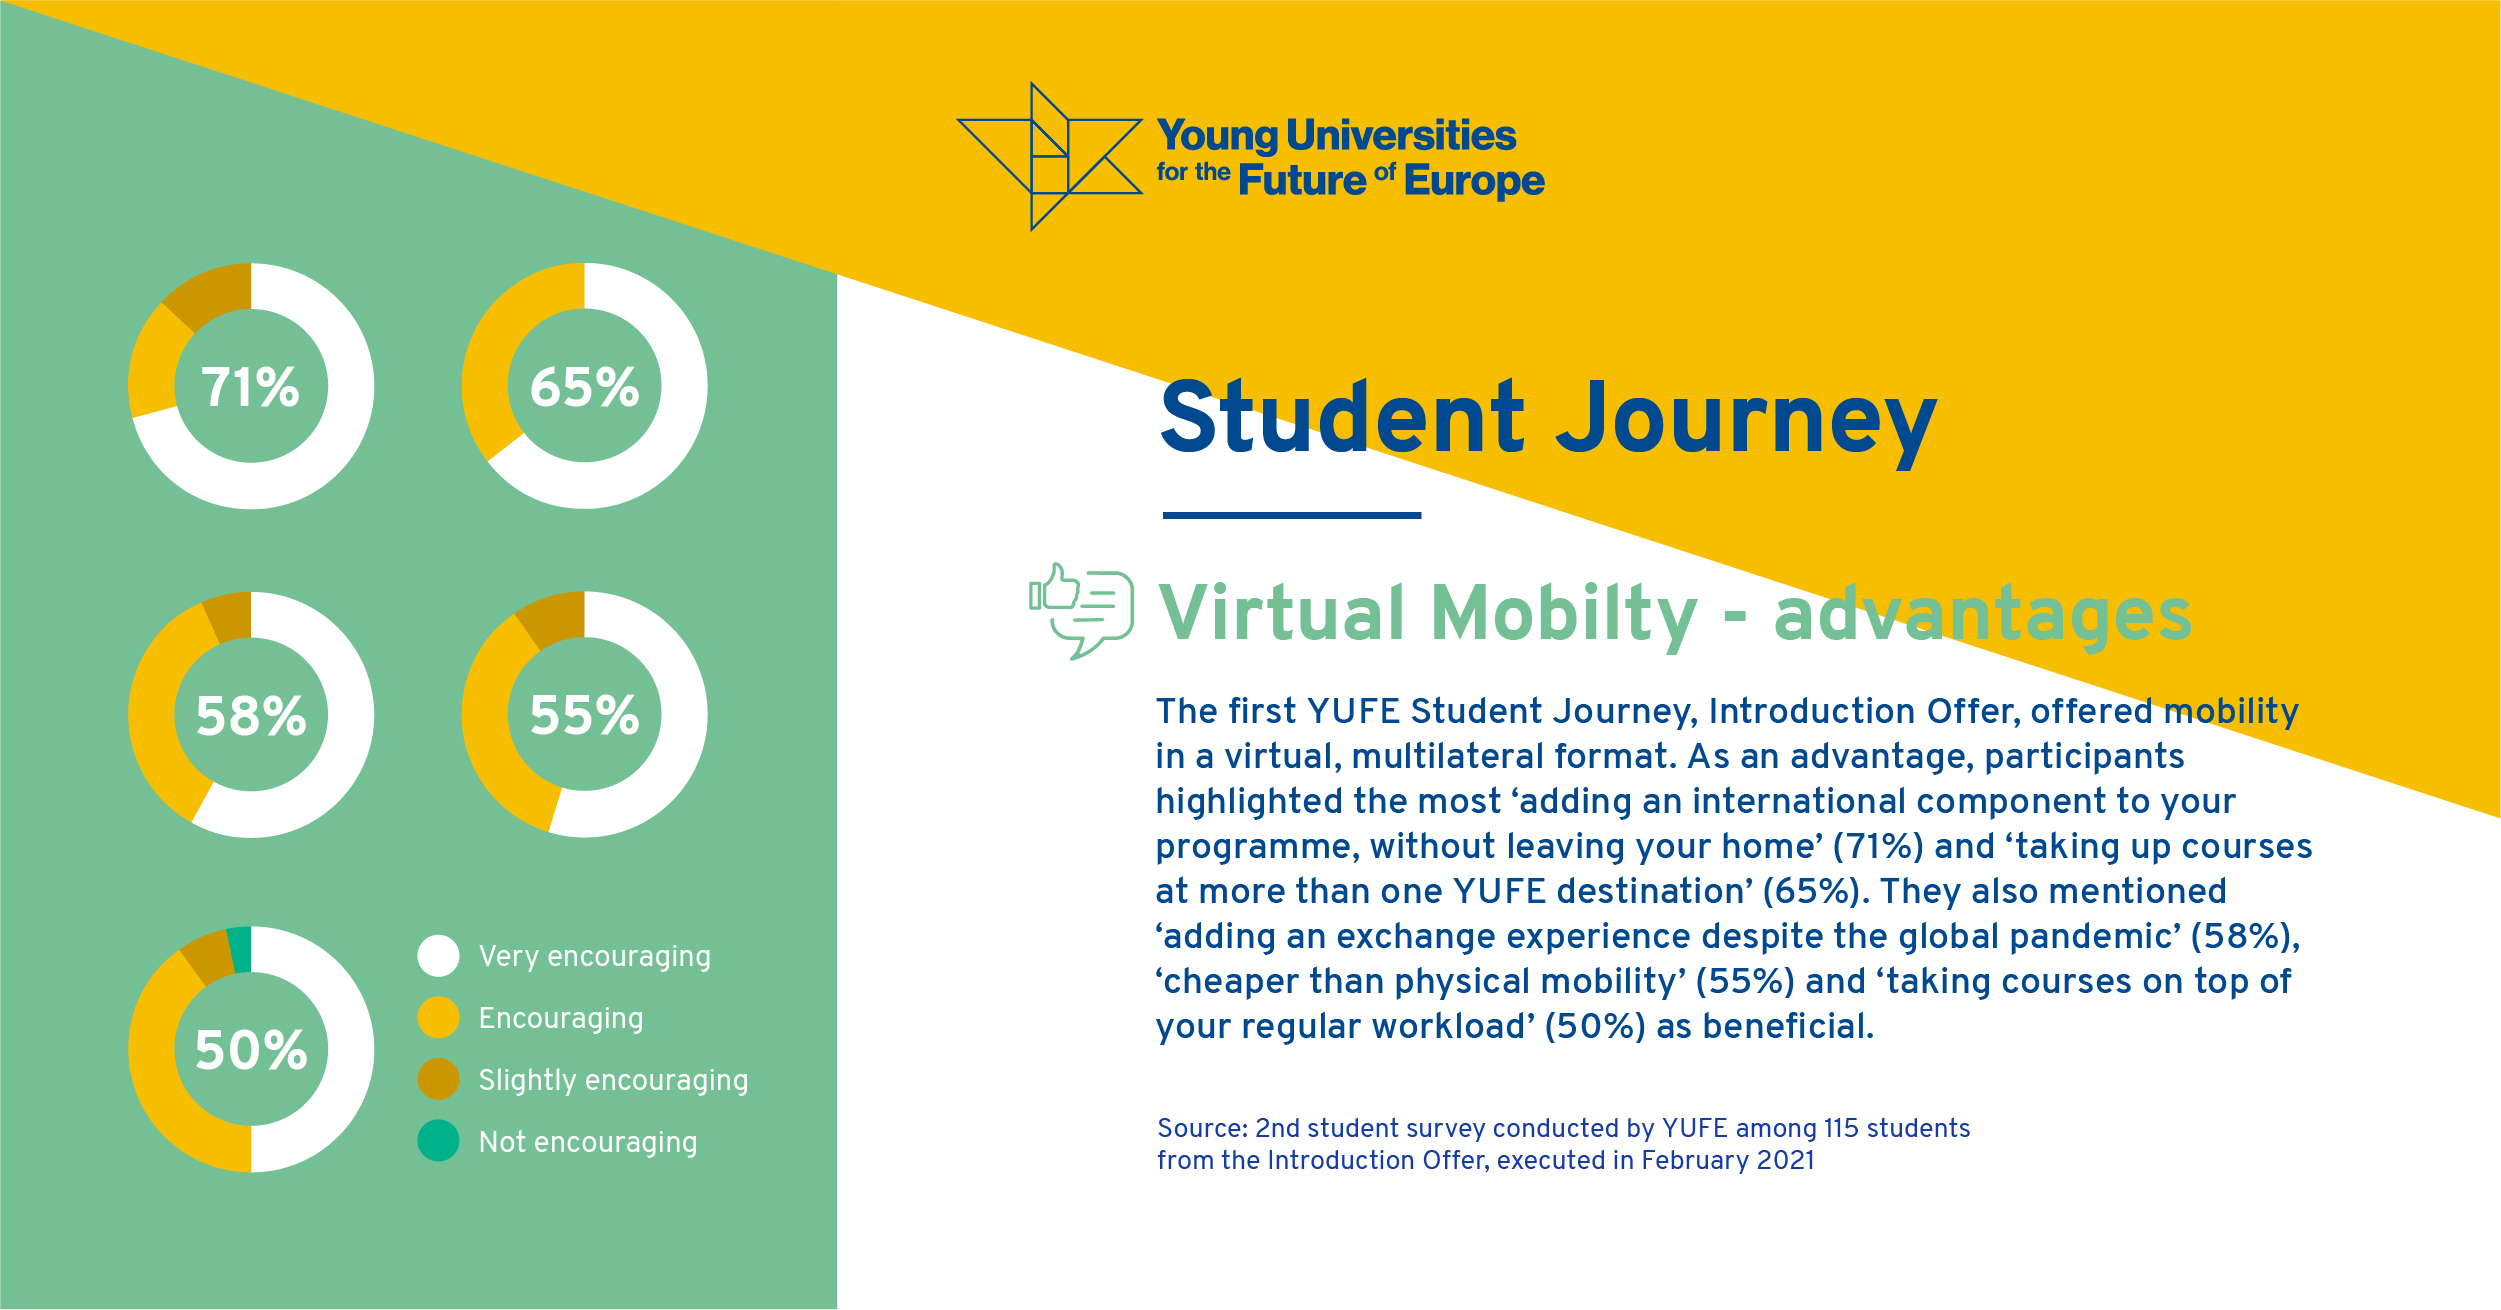 Virtual mobility advantages